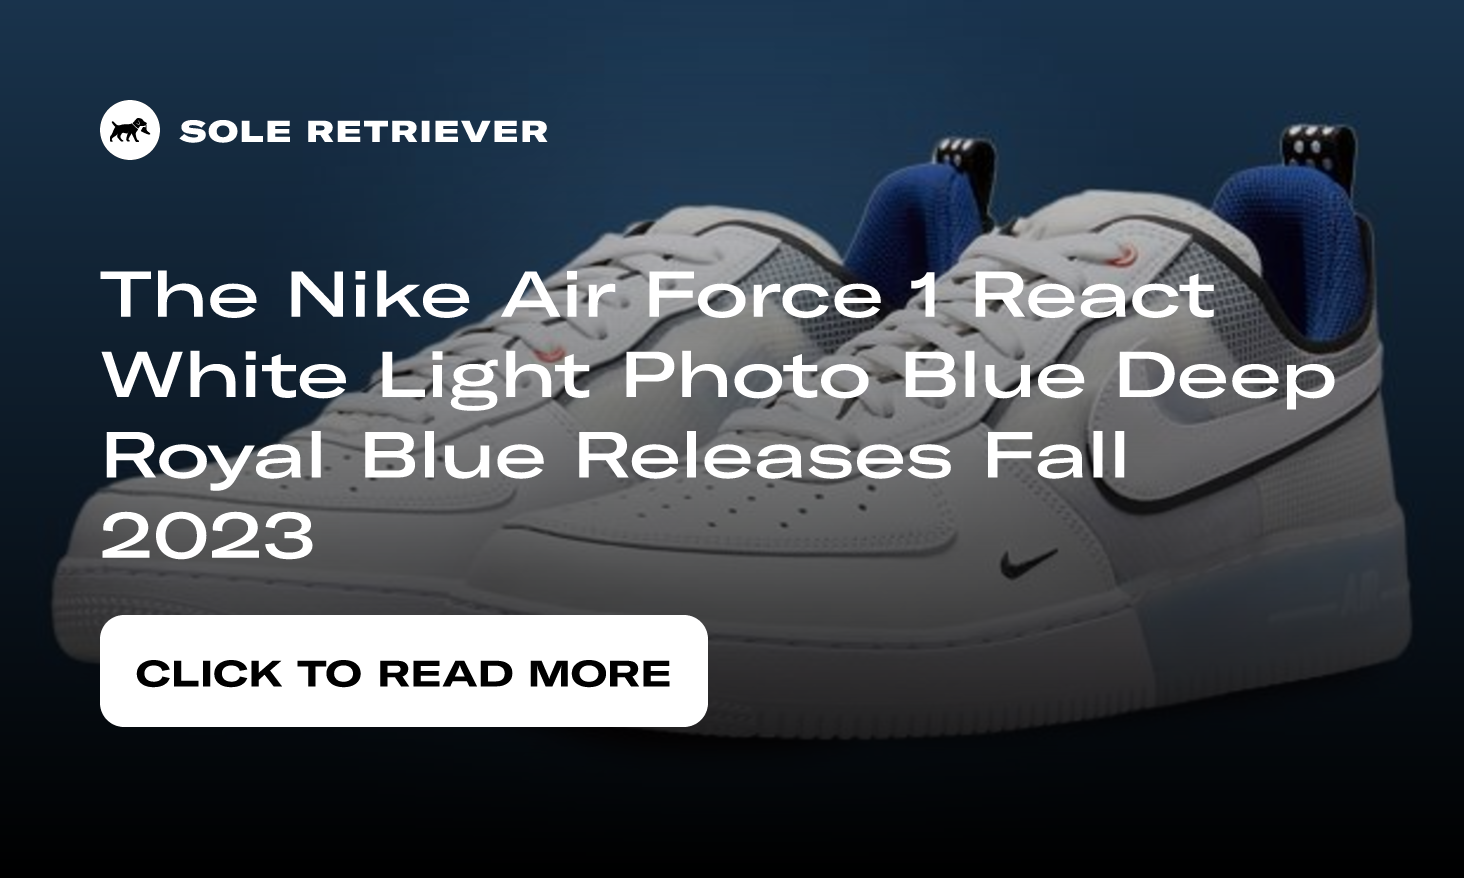 The Nike Air Force 1 React White Light Photo Blue Deep Royal Blue